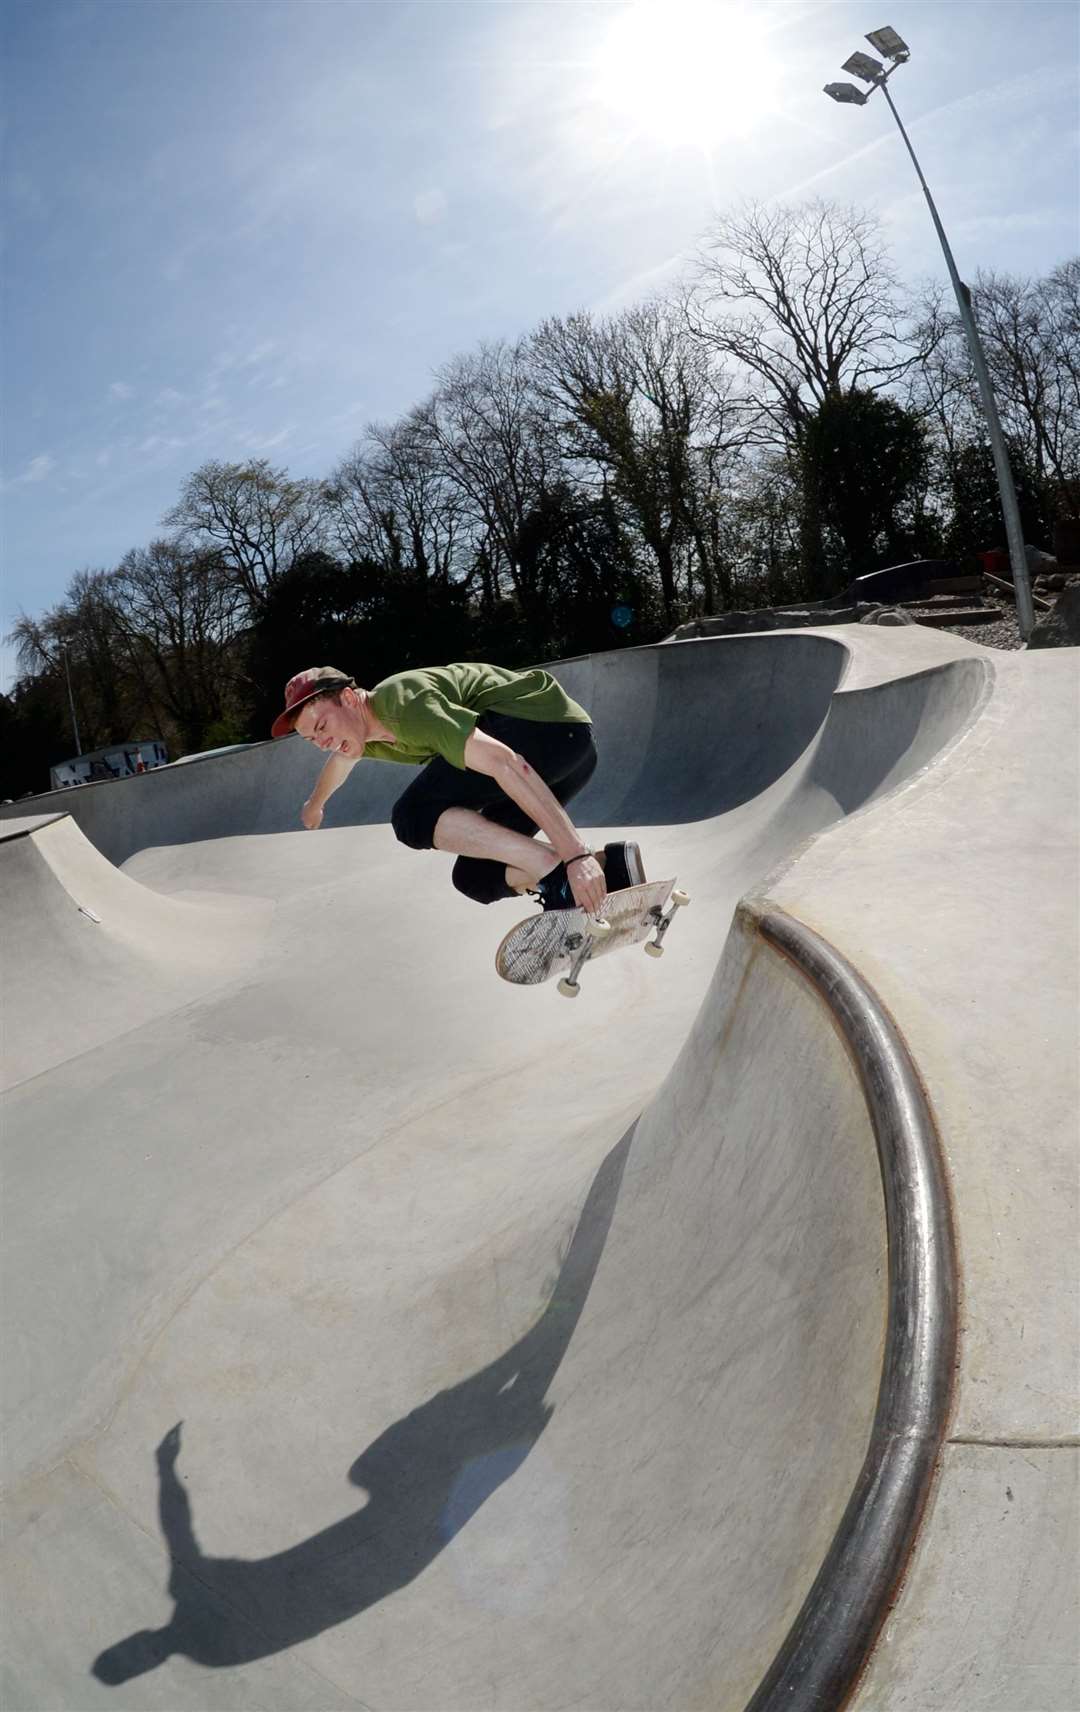 Alan Jones Associates helped open Inverness skate park.